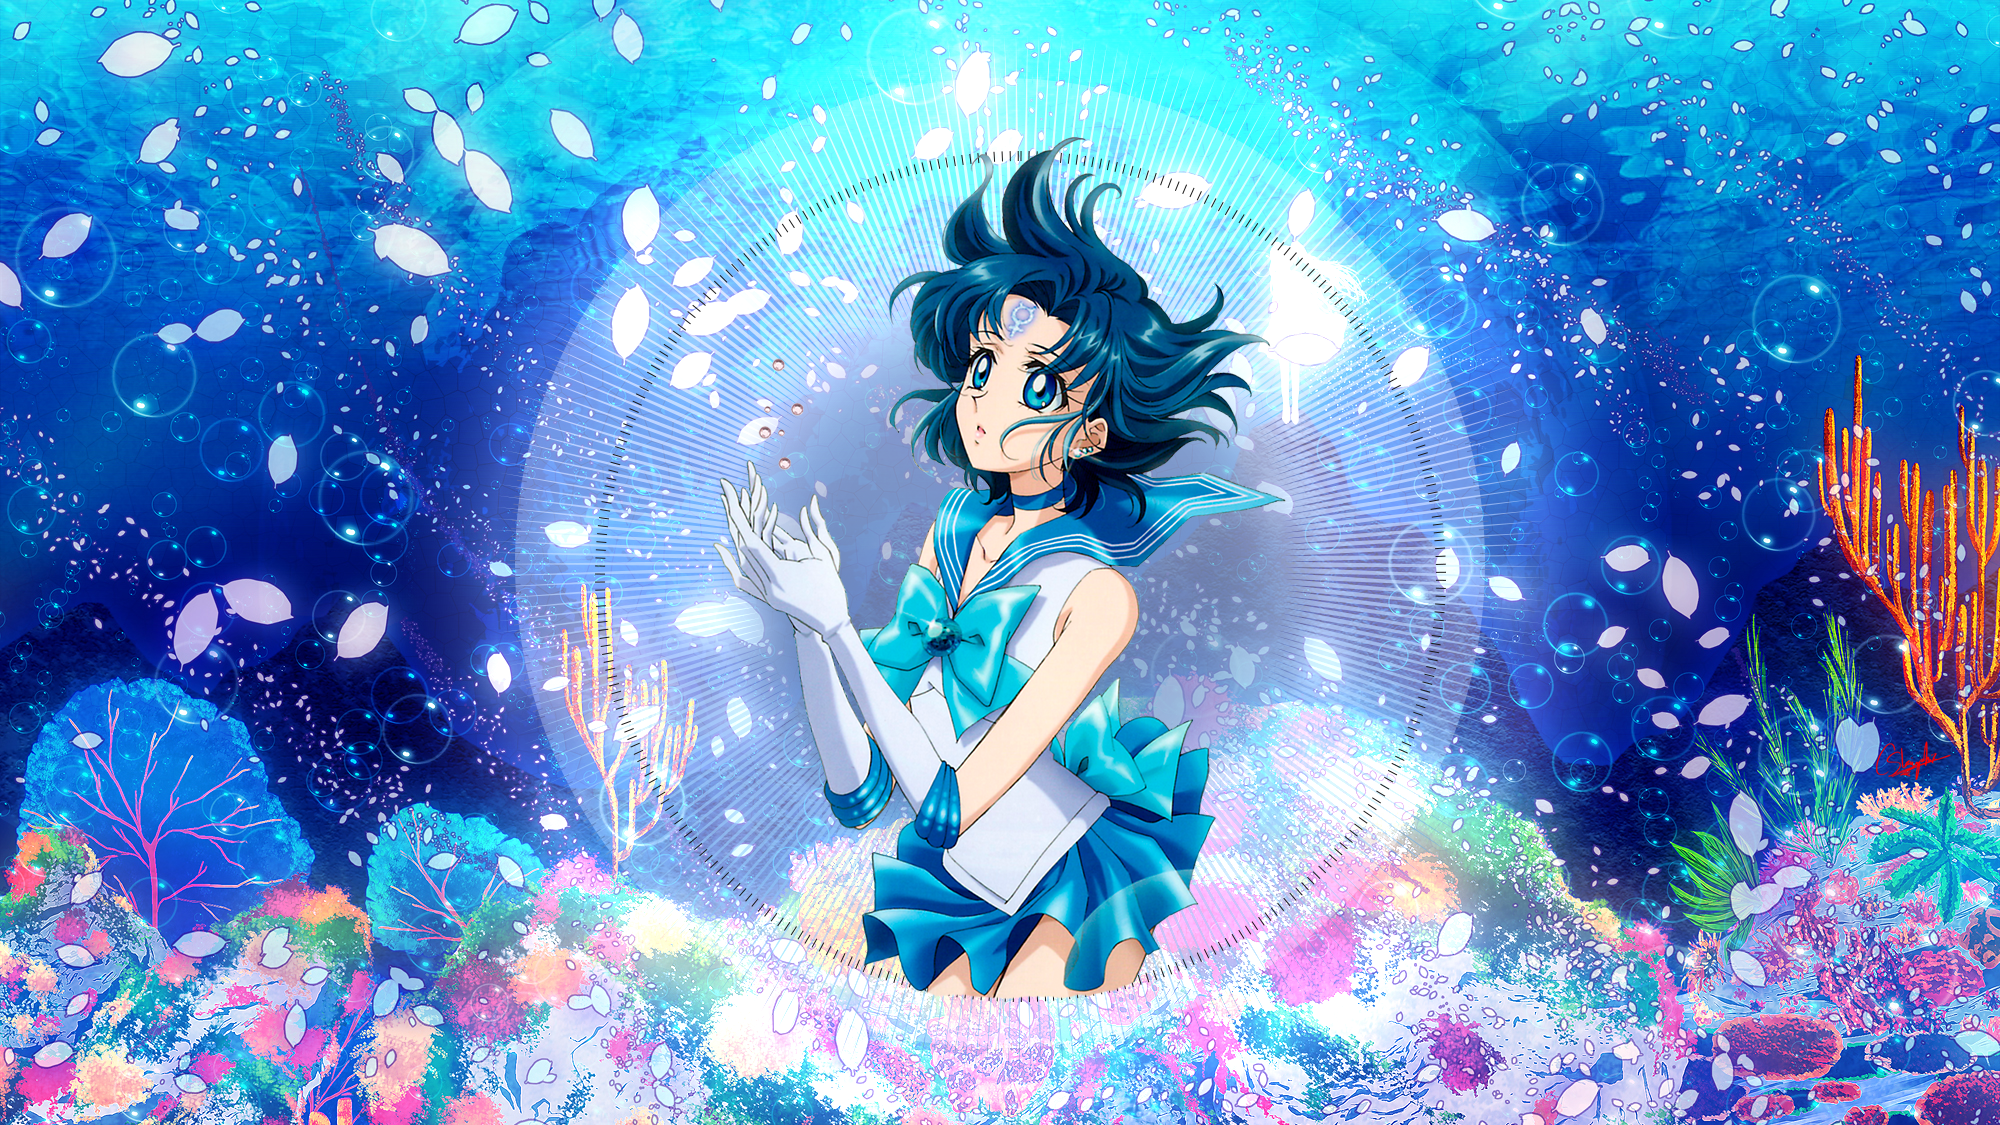 Picture In Picture Anime Anime Girls Mizuno Ami Sailor Moon Blue Hair Blue Eyes Sailor Mercury Short 2000x1125